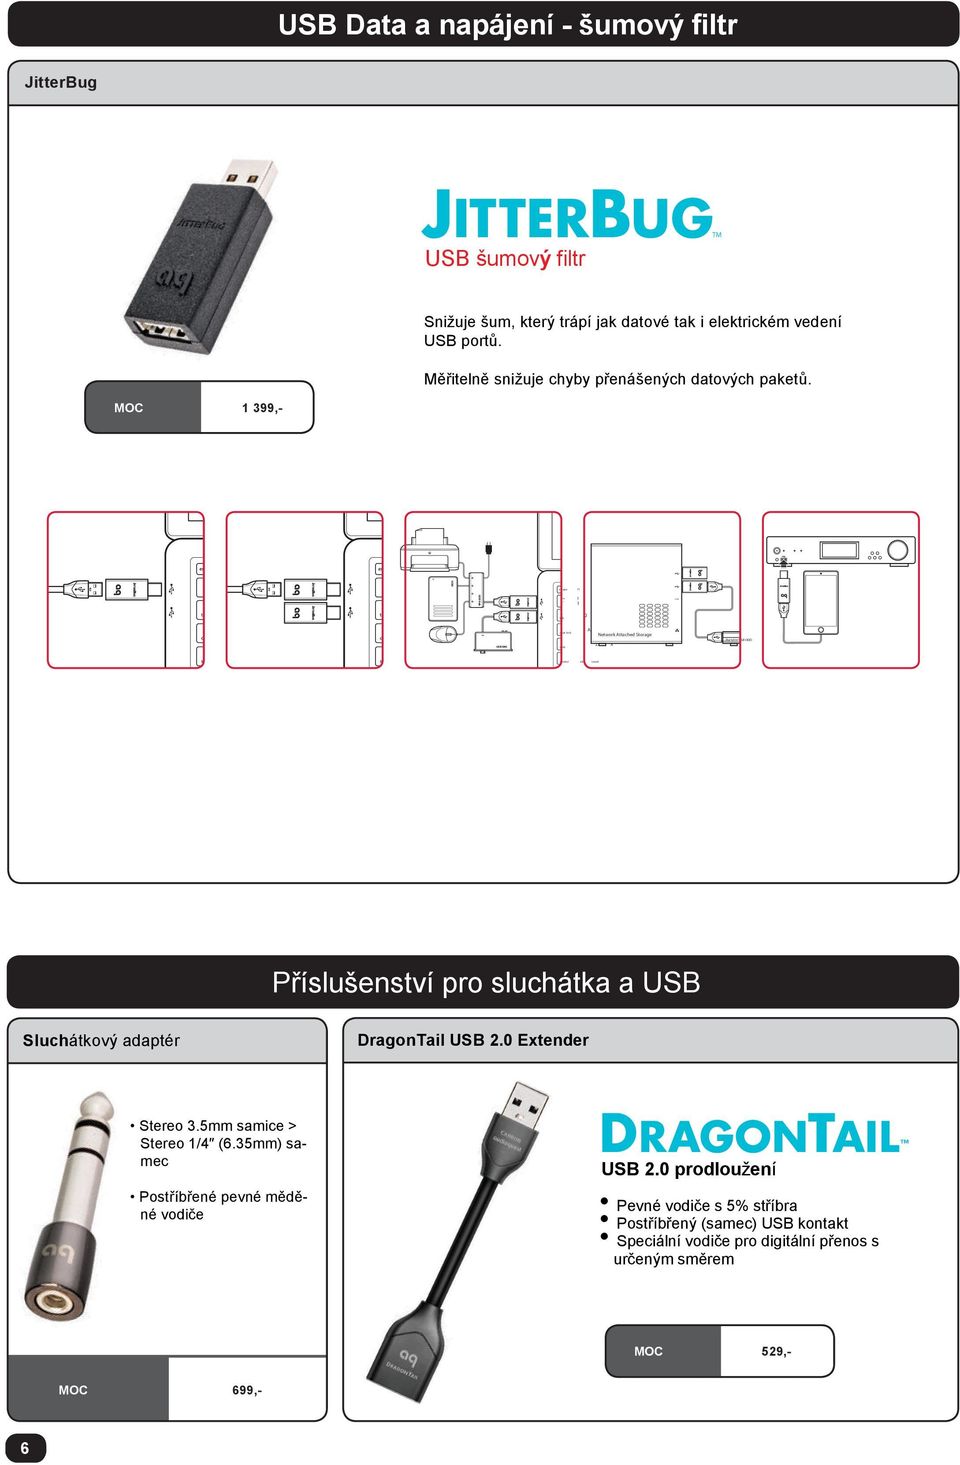 1 @ 2 # 3 $ 4 Q W E A S D Network Attached Storage Z X Portable USB HDD Příslušenství pro sluchátka a USB Sluchátkový adaptér DragonTail USB 2.0 Extender Stereo 3.